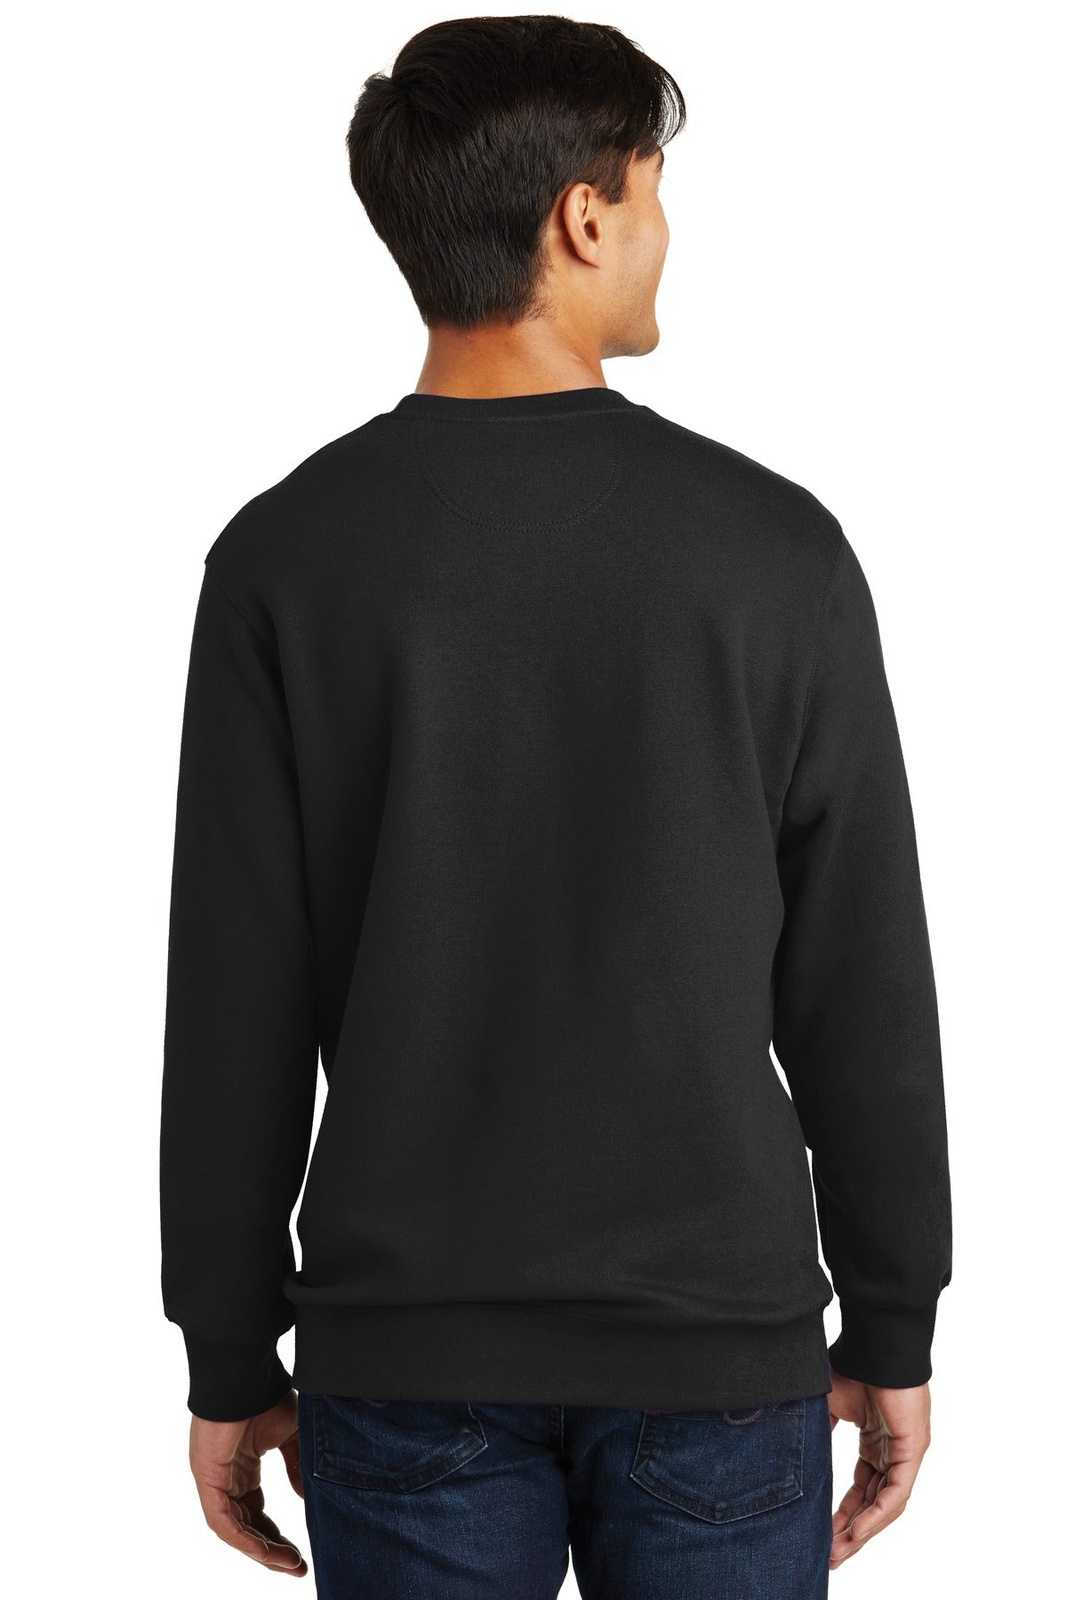 Port & Company PC850 Fan Favorite Fleece Crewneck Sweatshirt - Jet Black - HIT a Double - 1